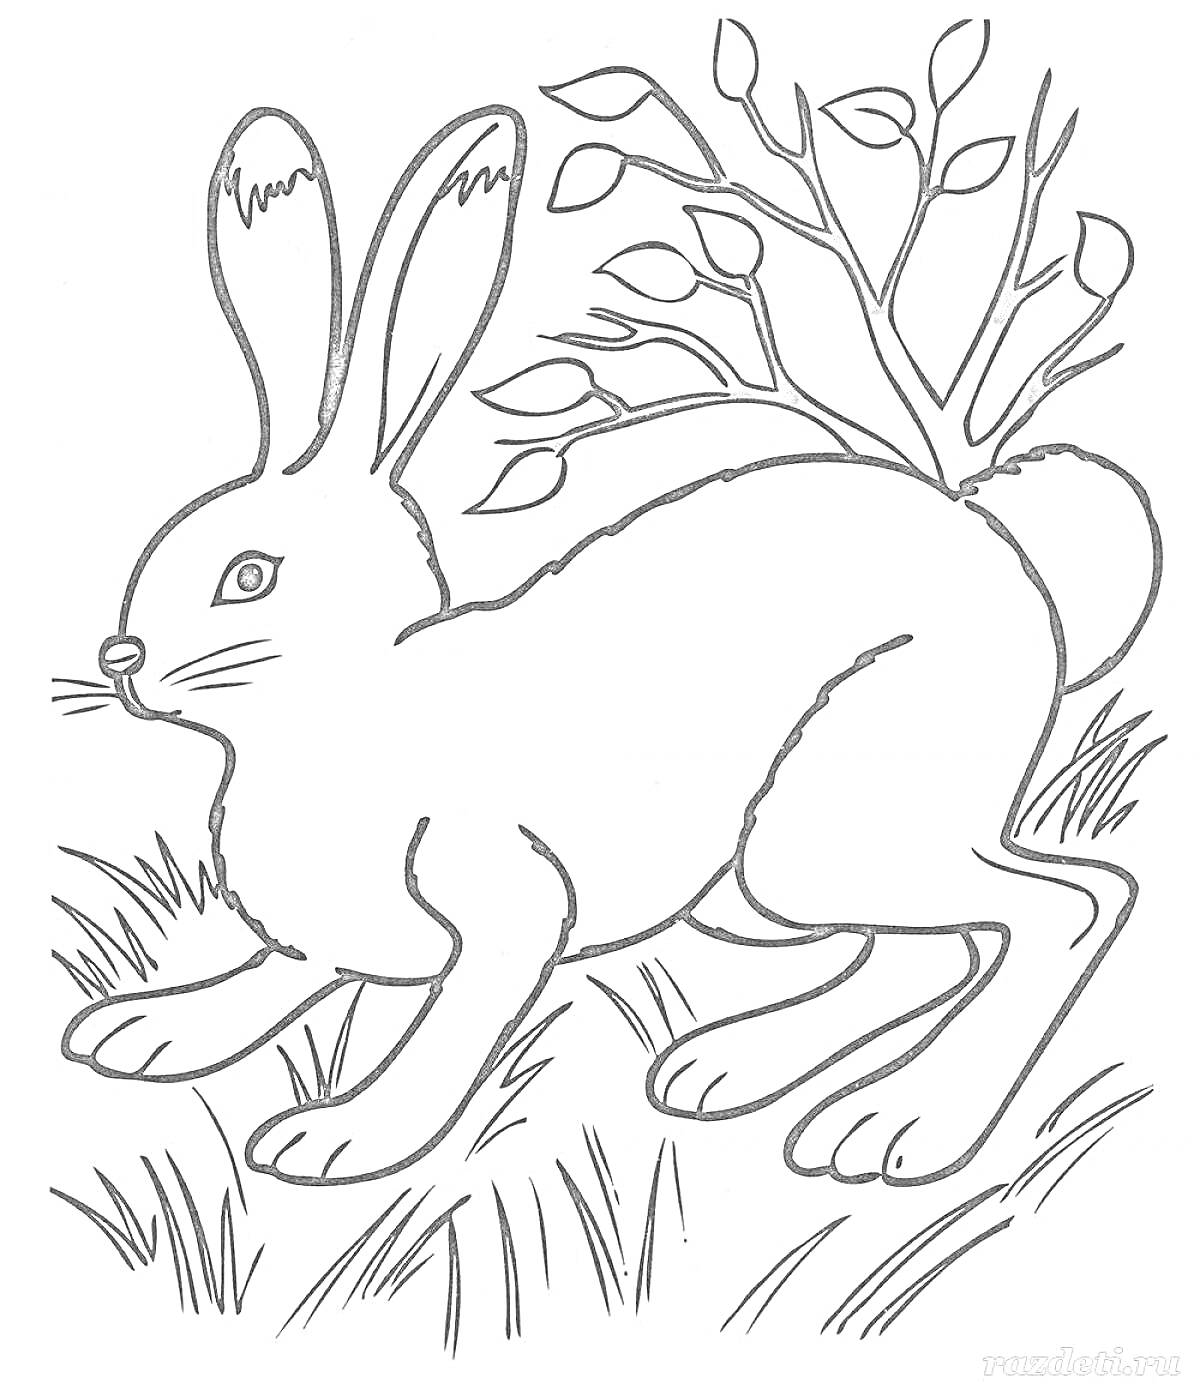 Раскраска Кролик на поляне среди травы и веток дерева